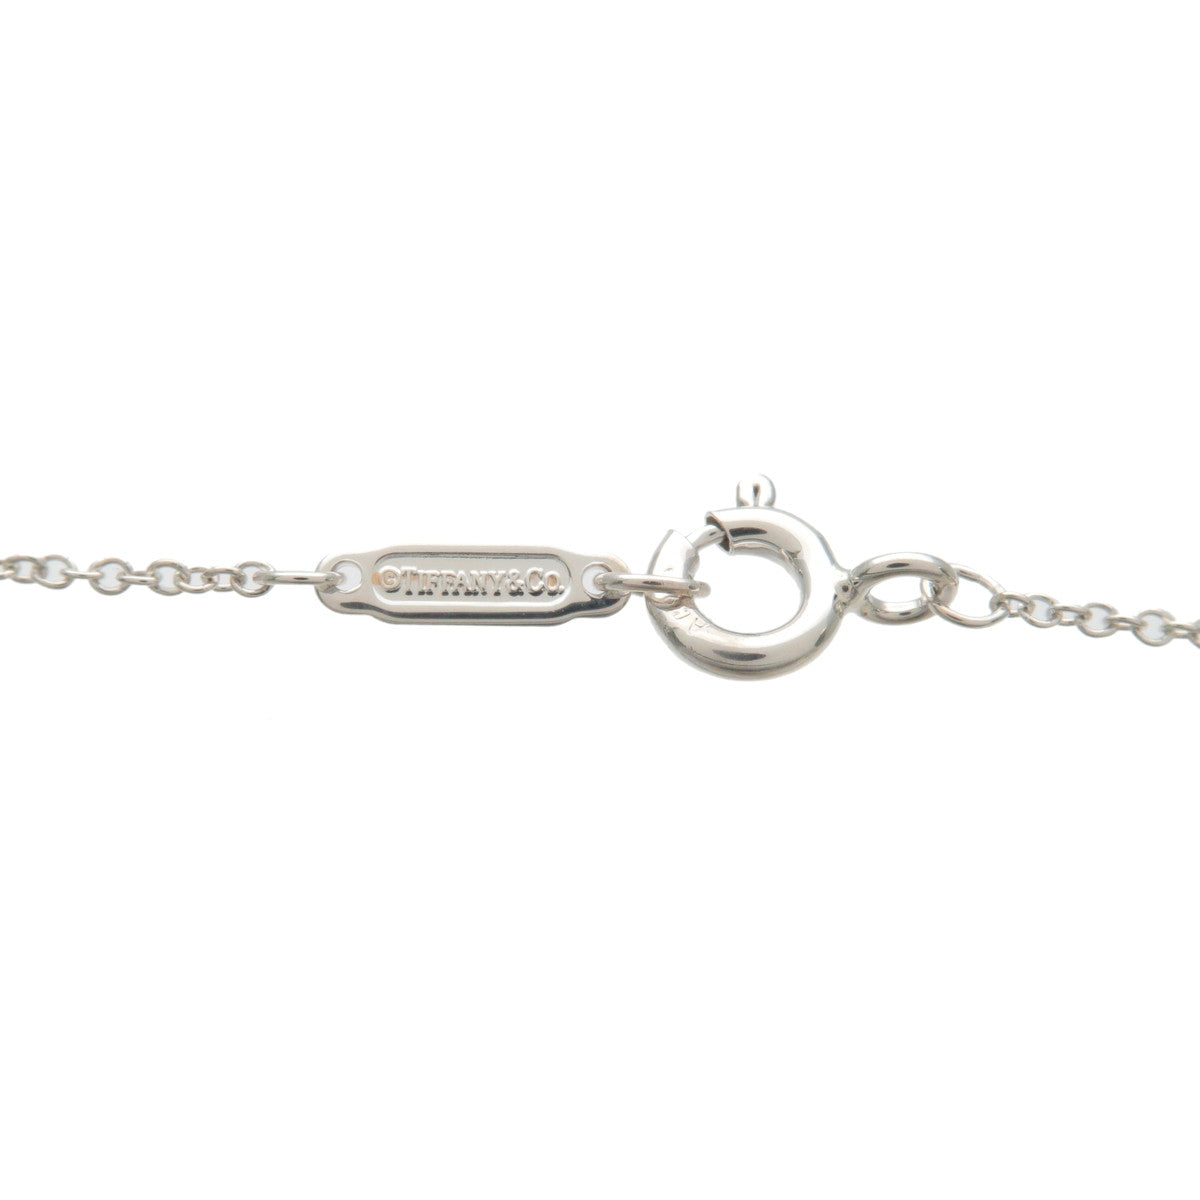 Tiffany&Co. 1837 Circle Necklace Medium SV925 Silver